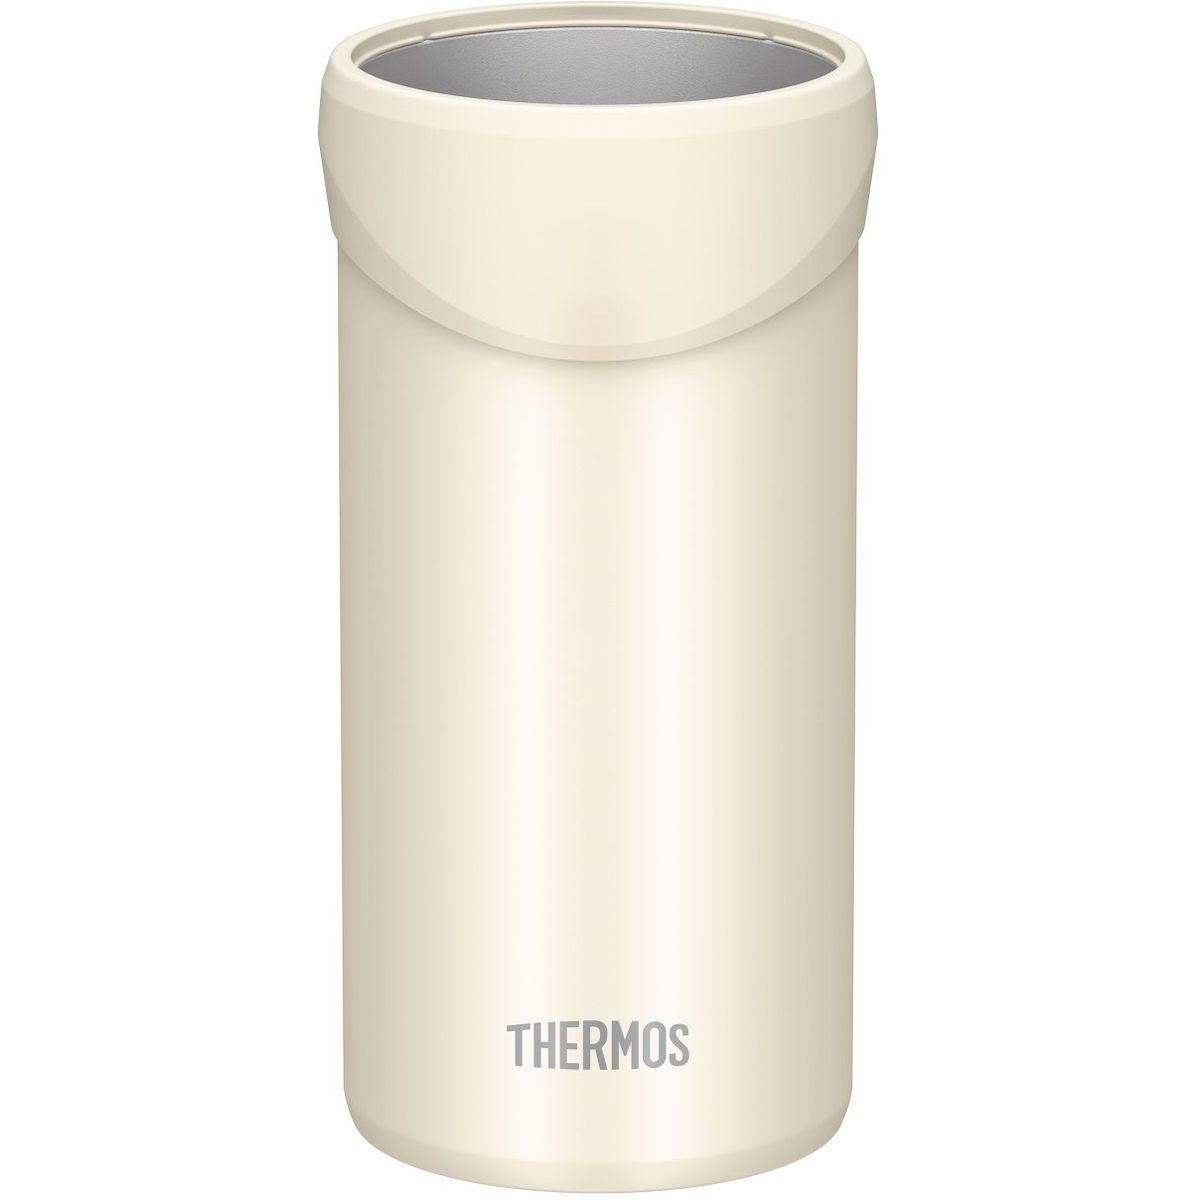 THERMOS 保冷缶ホルダー ホワイト 350・500mL缶対応 真空断熱 保温保冷